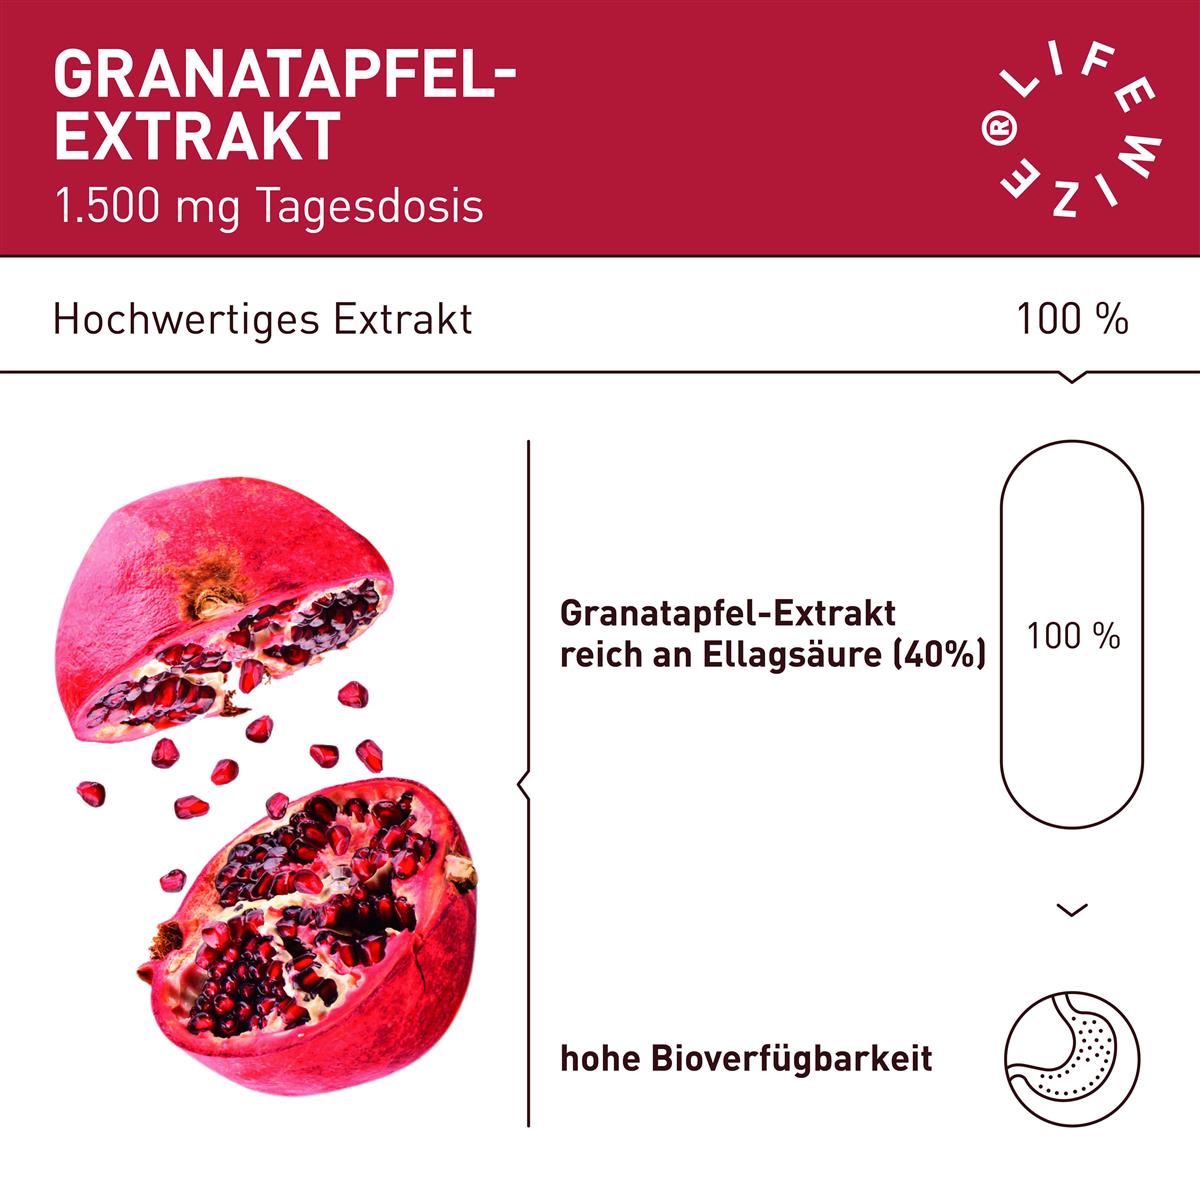 
                  
                    LifeWize Granatapfel 120 Kapseln
                  
                